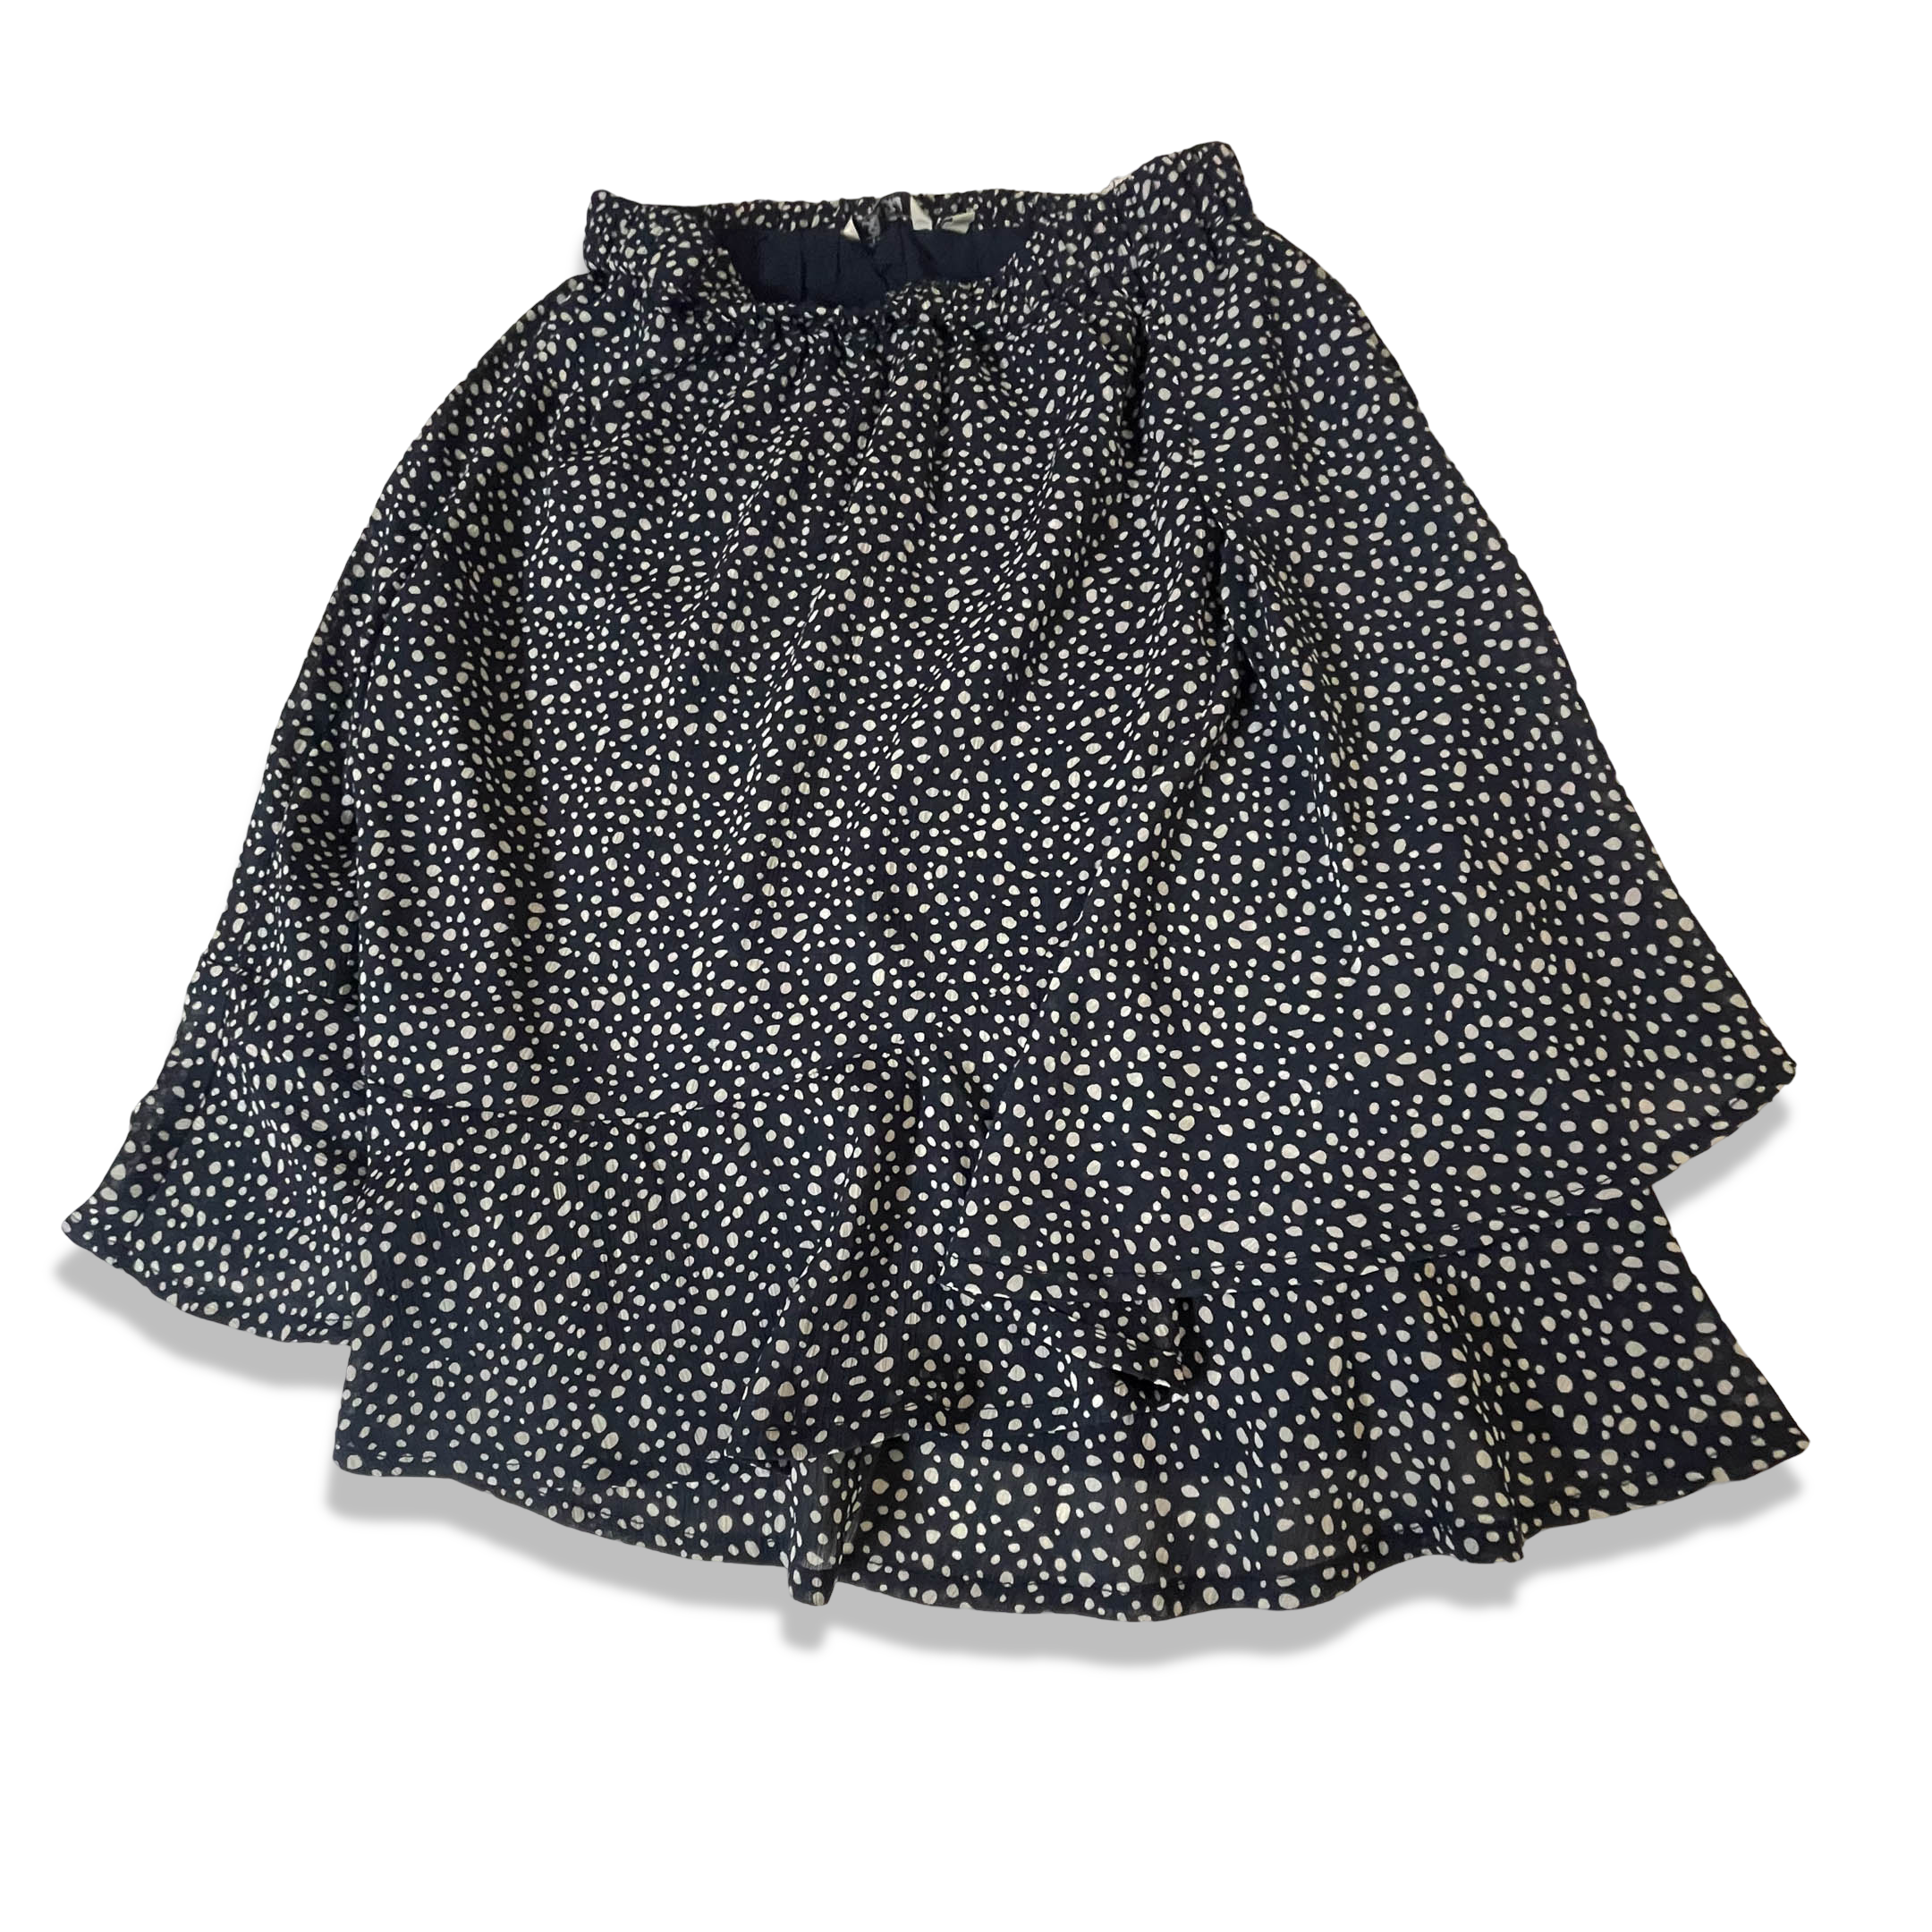 Vintage Women's Petrol polka dot print black ruffle mini skirt in XS/S|SKU 3799<br>